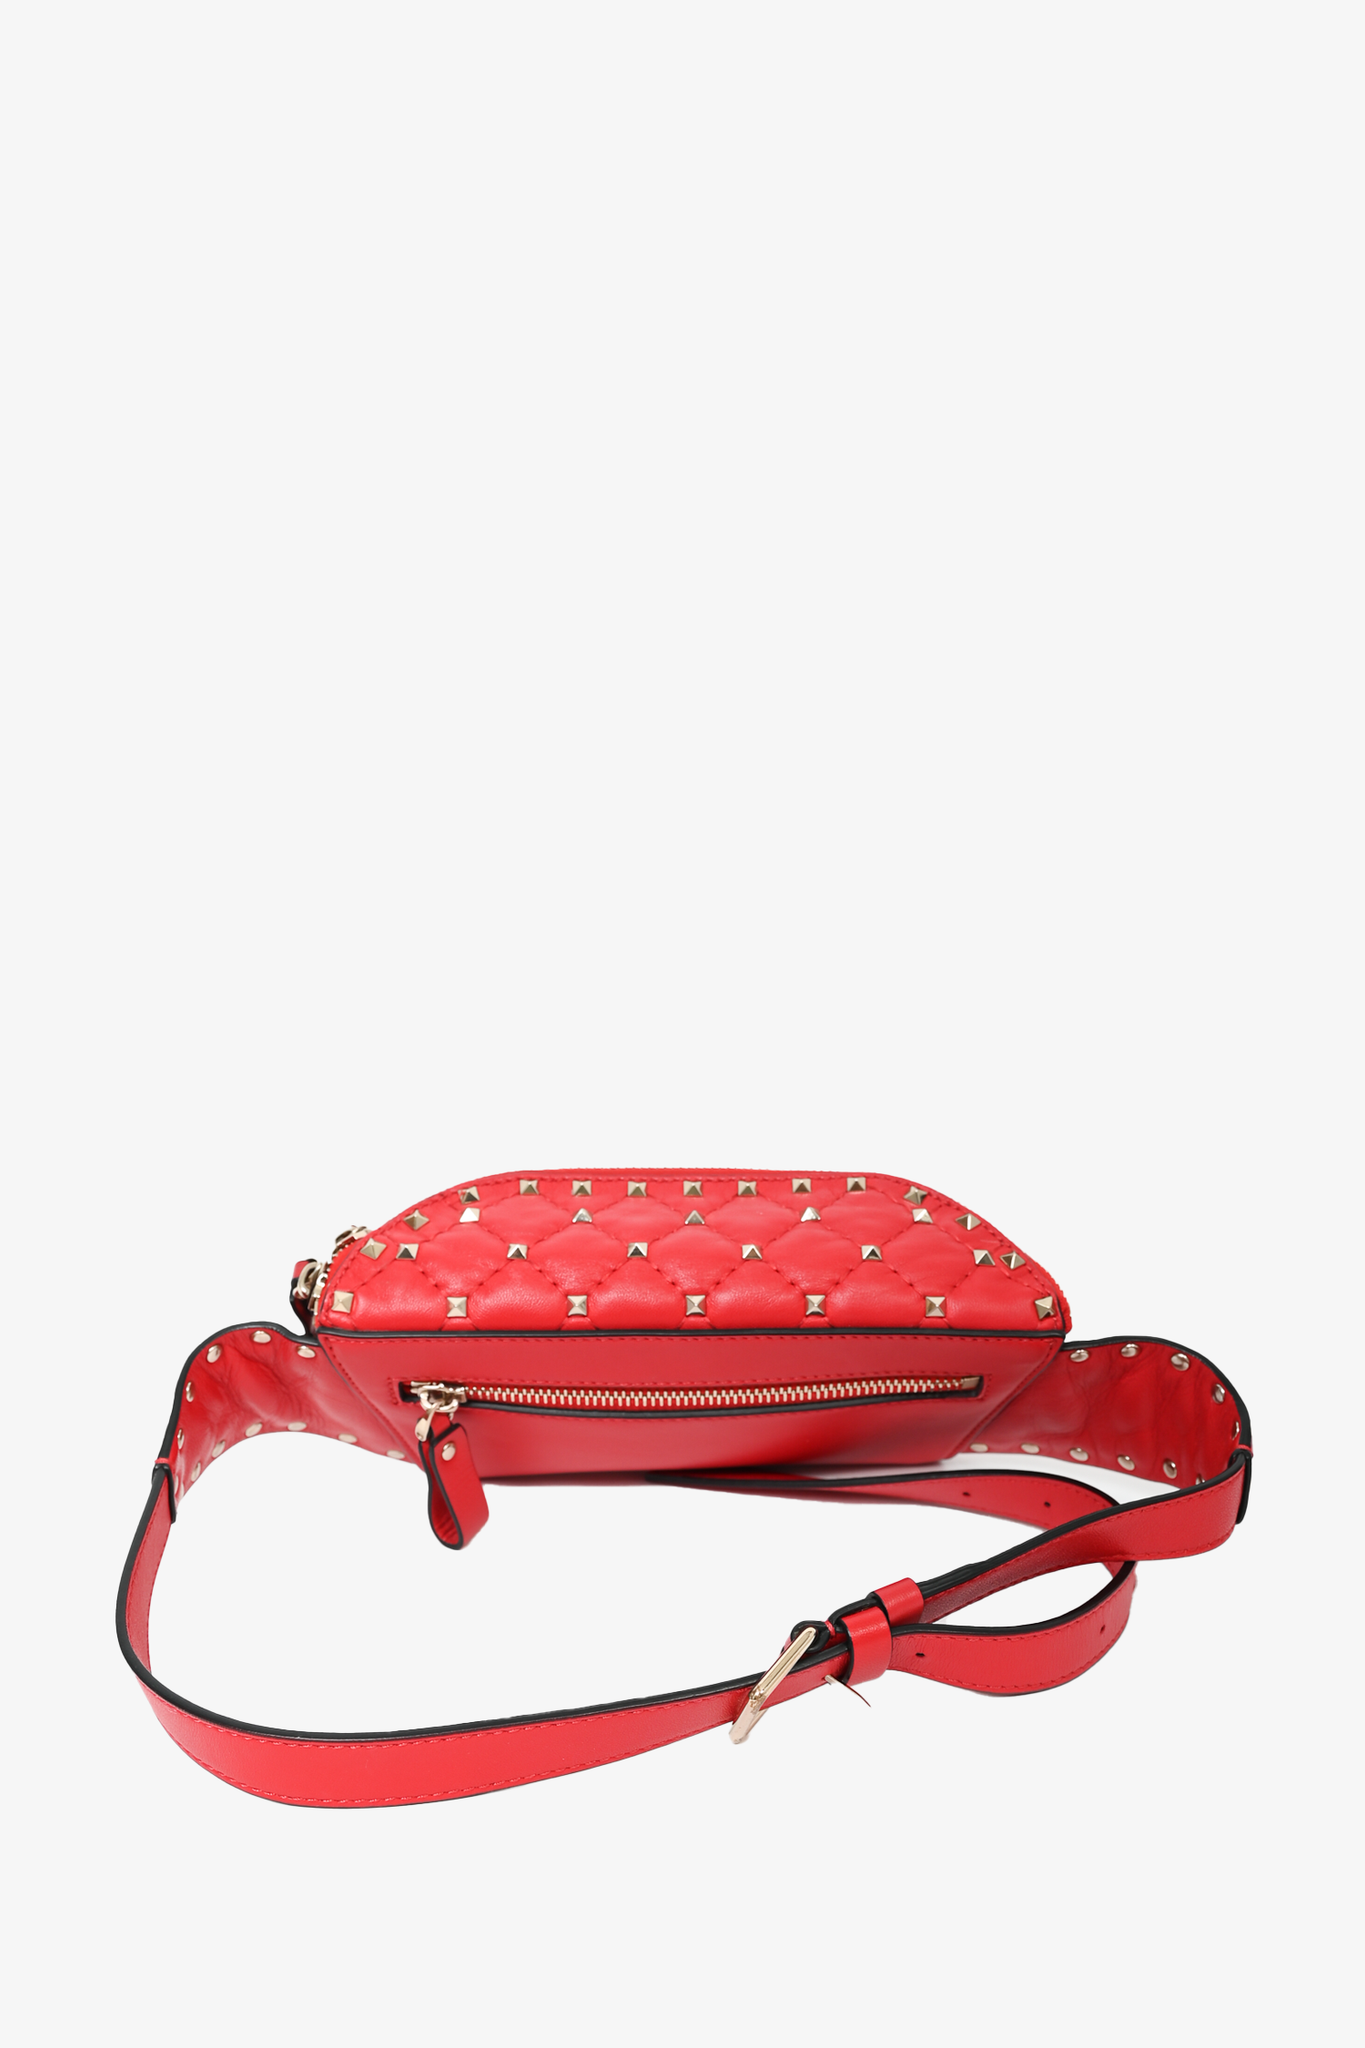 Valentino Red Lambskin Leather Rockstud Belt Bag Size 85